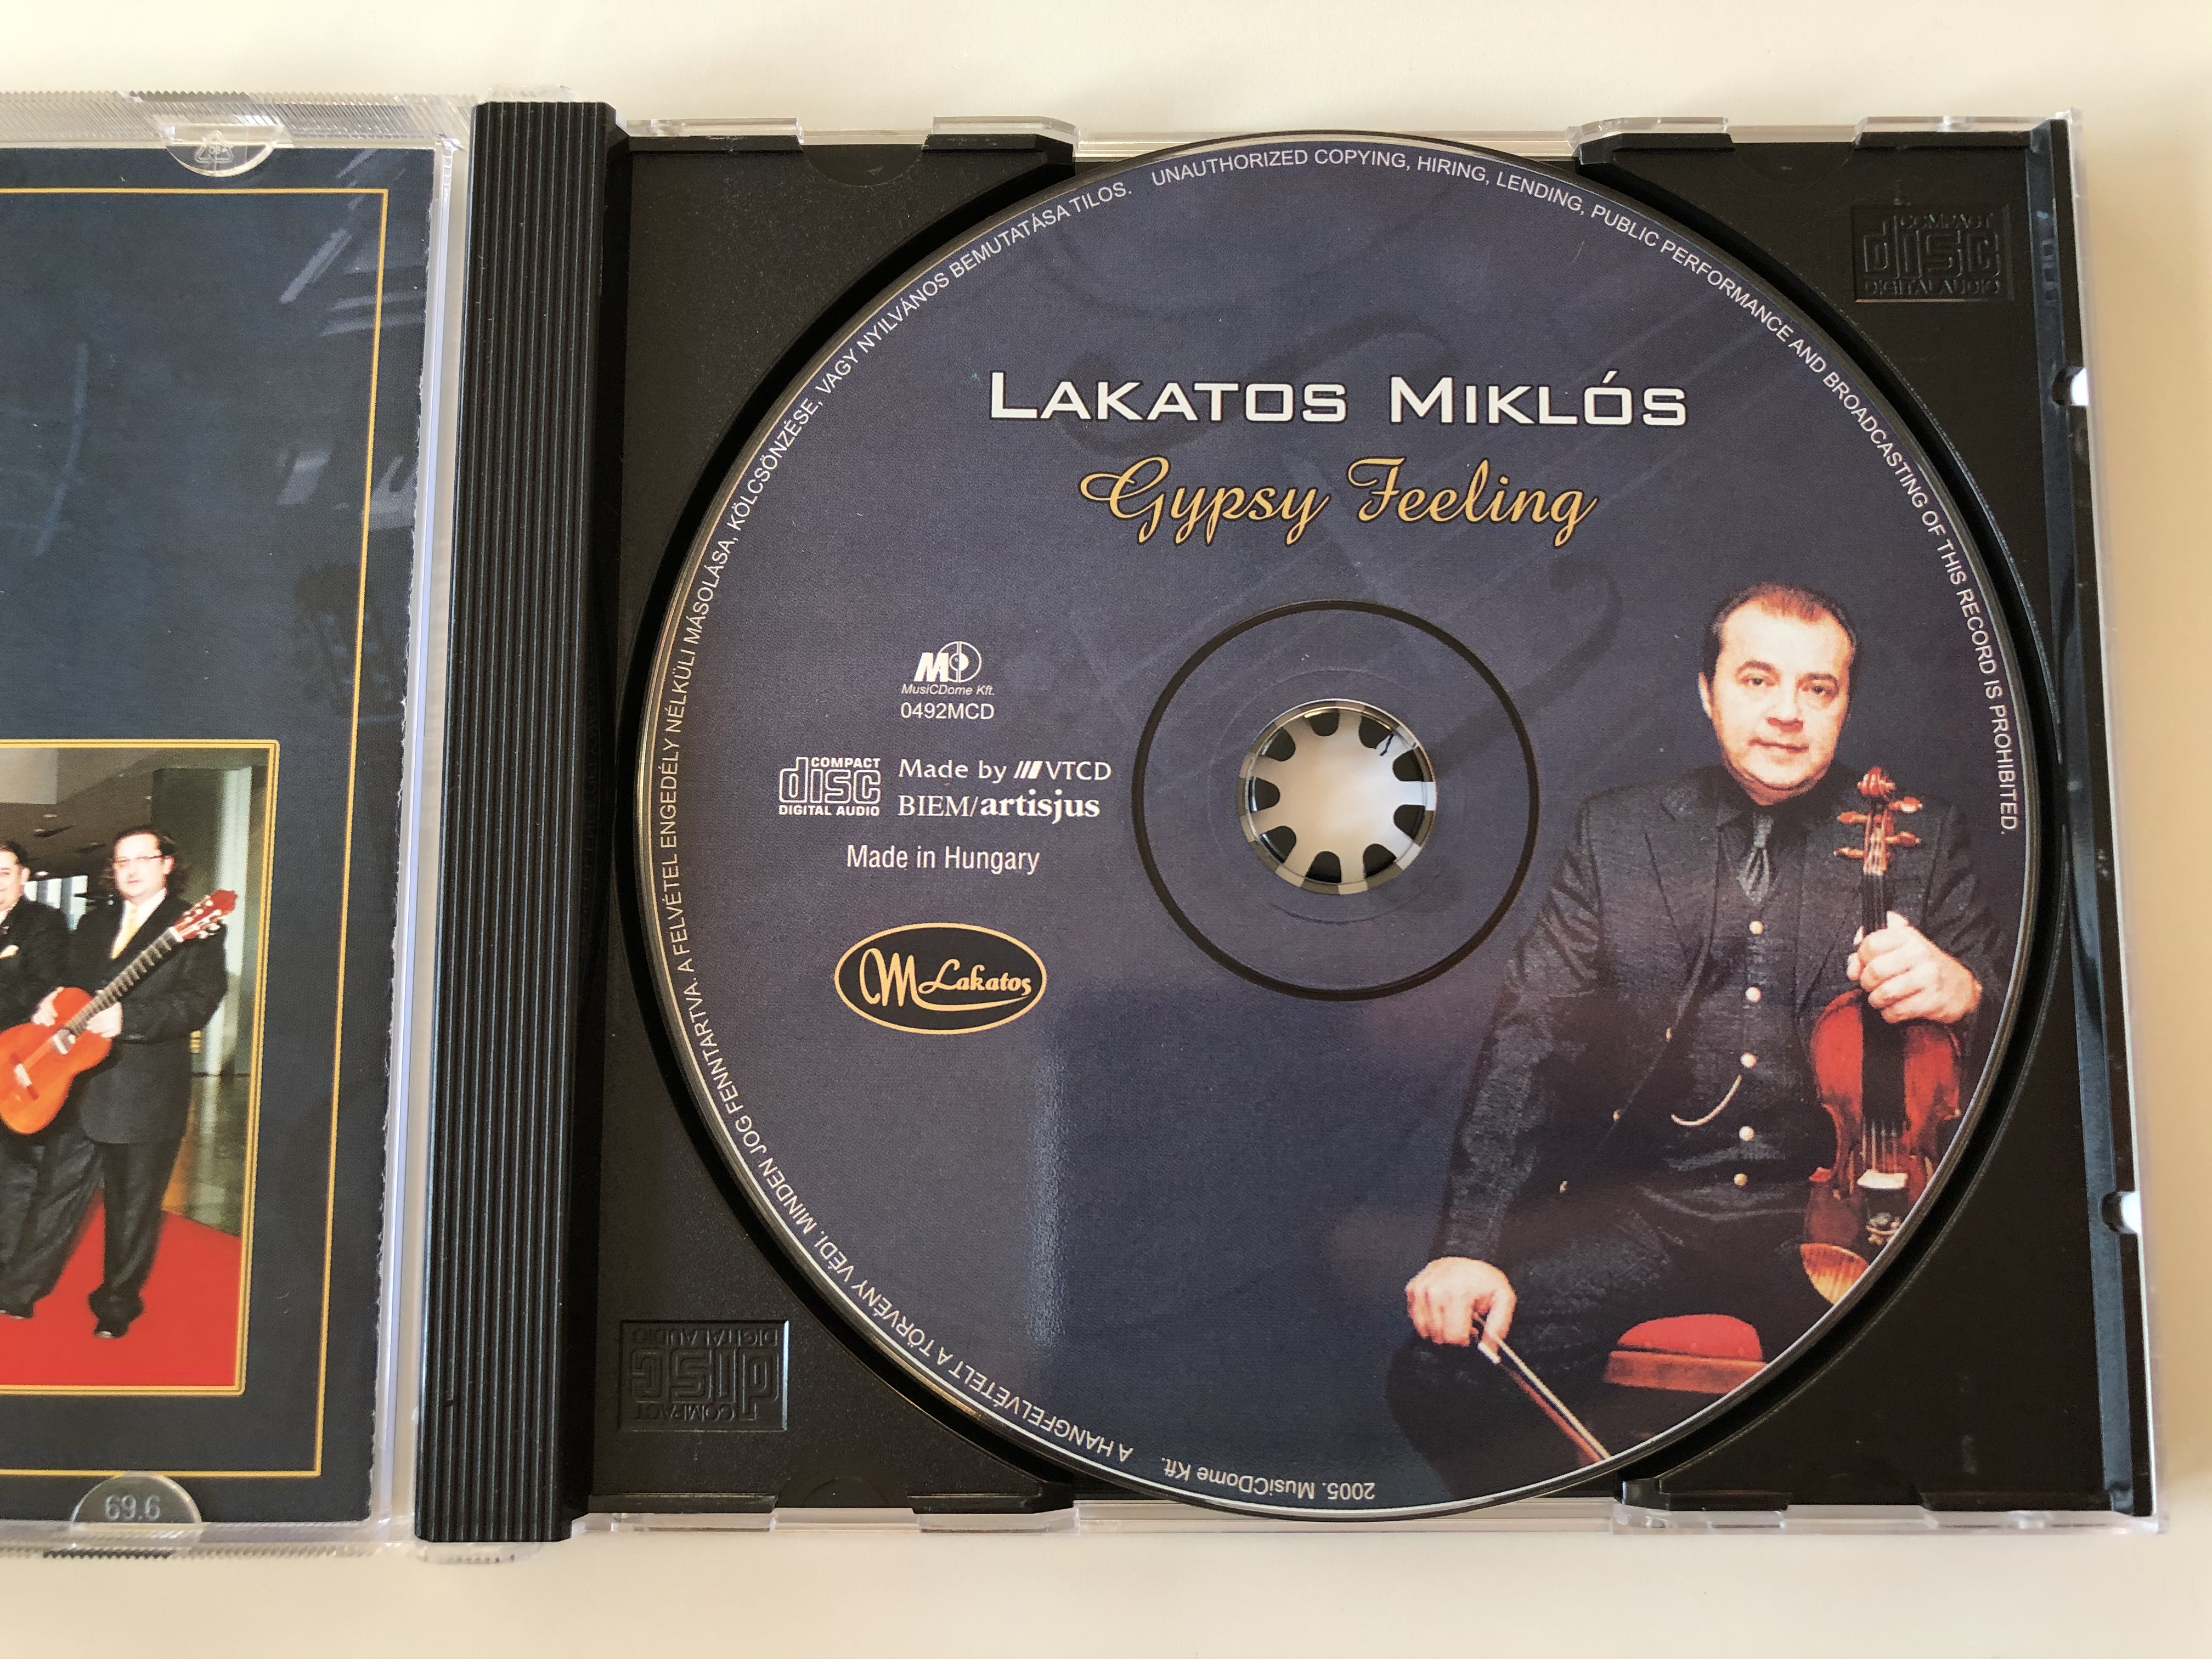 lakatos-miklos-gypsy-feeling-musicdome-kft.-audio-cd-2005-5998175162430-4-.jpg